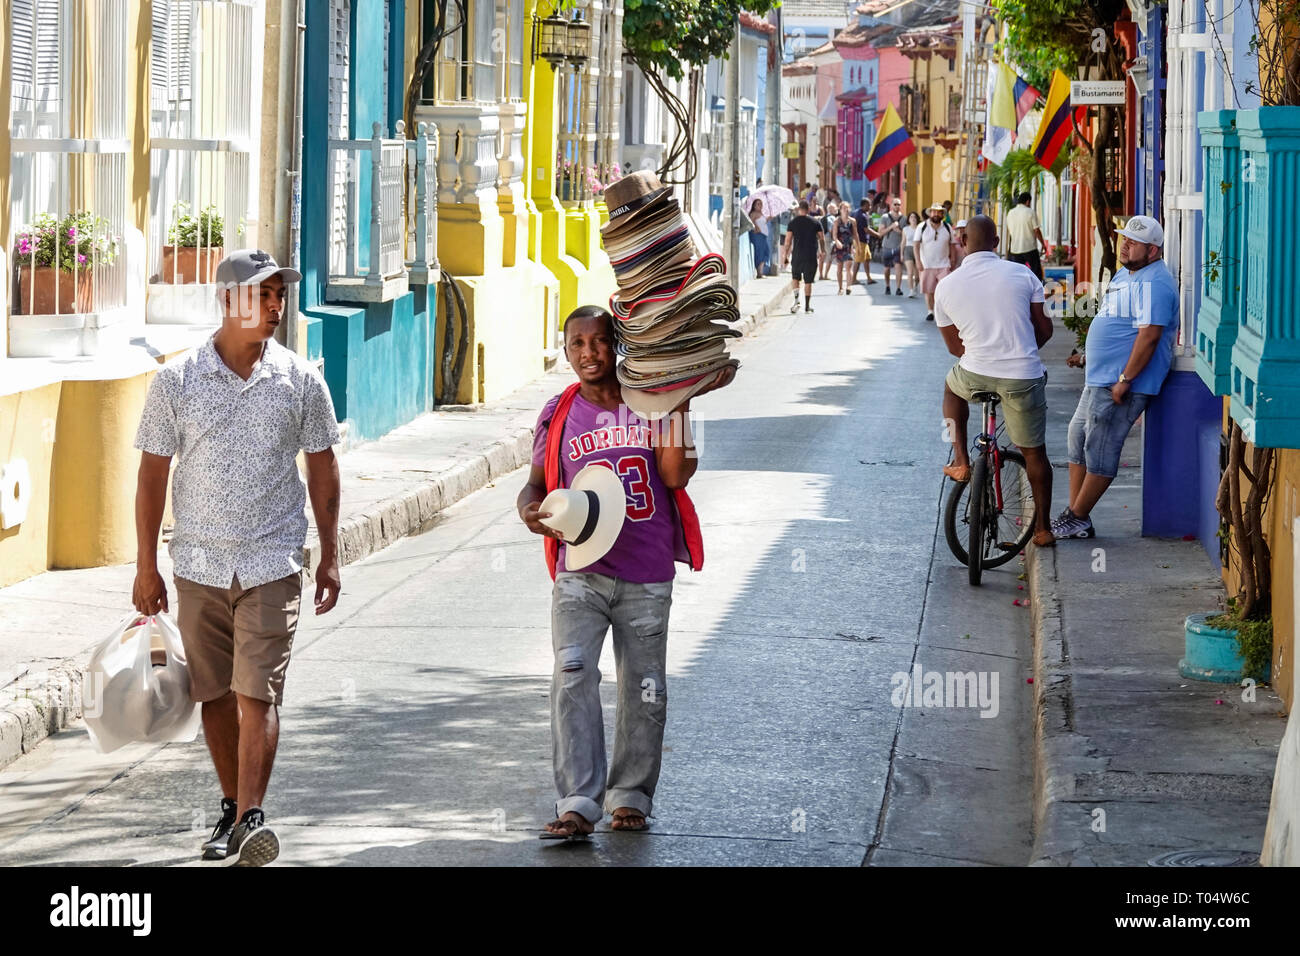 Cartagena COLOMBIA,CENTRO,SAN DIEGO,RESIDENTES HISPANOS,HOMBRE HOMBRE HOMBRE MASCULINO,HOGARES COLONIALES,Fachadas de colores,Vendor de sombreros,Negro Afro Caribe,CO Foto de stock